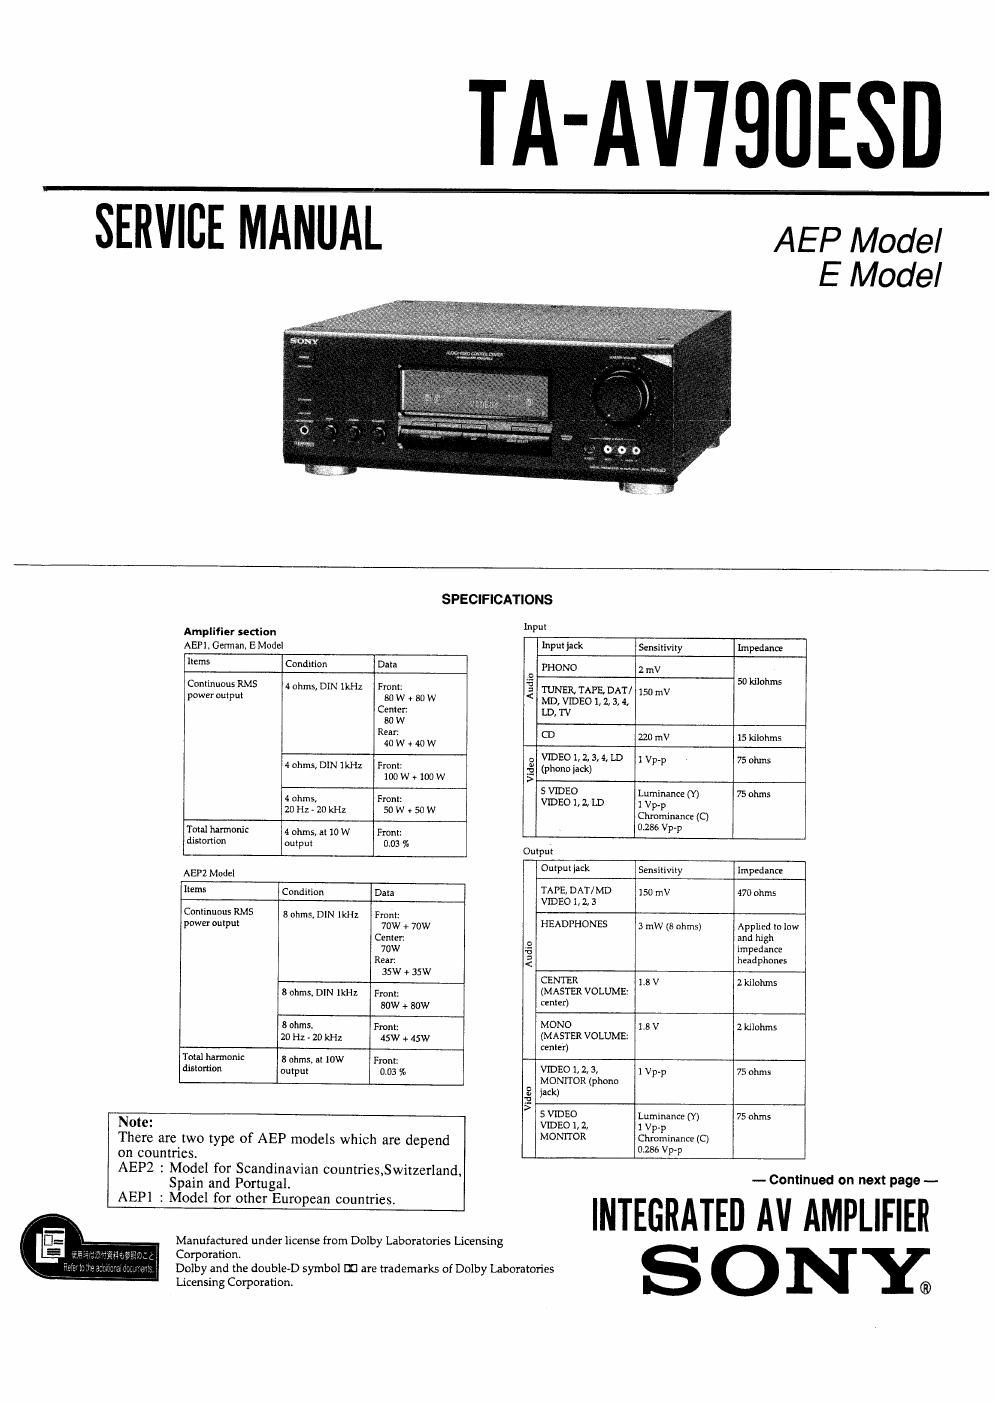 sony ta av 790esd service manual